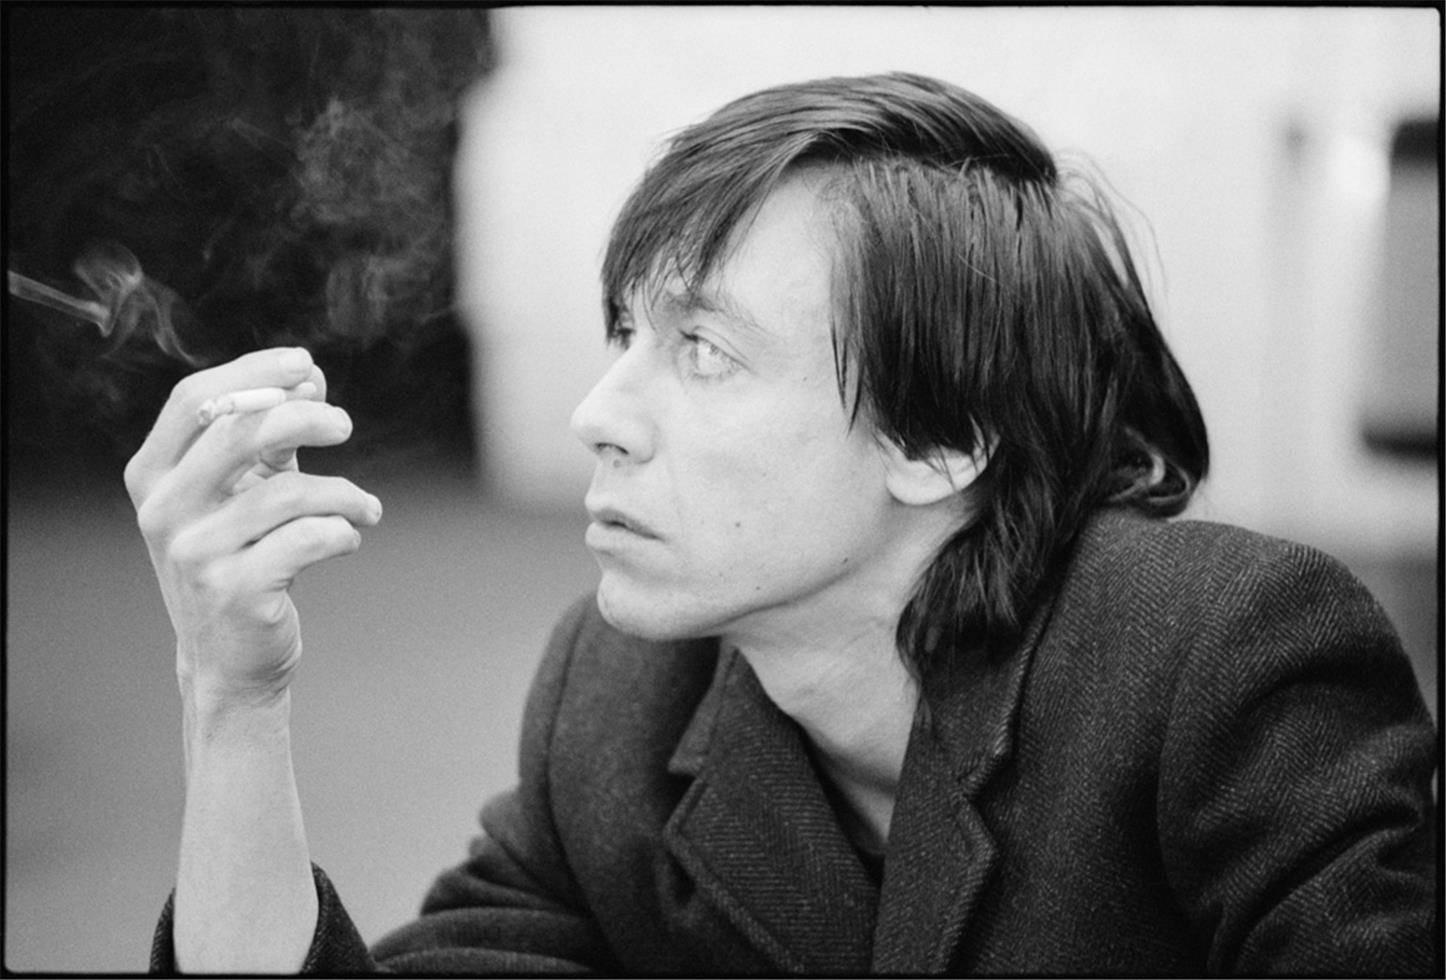 Michael Zagaris Portrait Photograph – Smoking in Iggy Pop